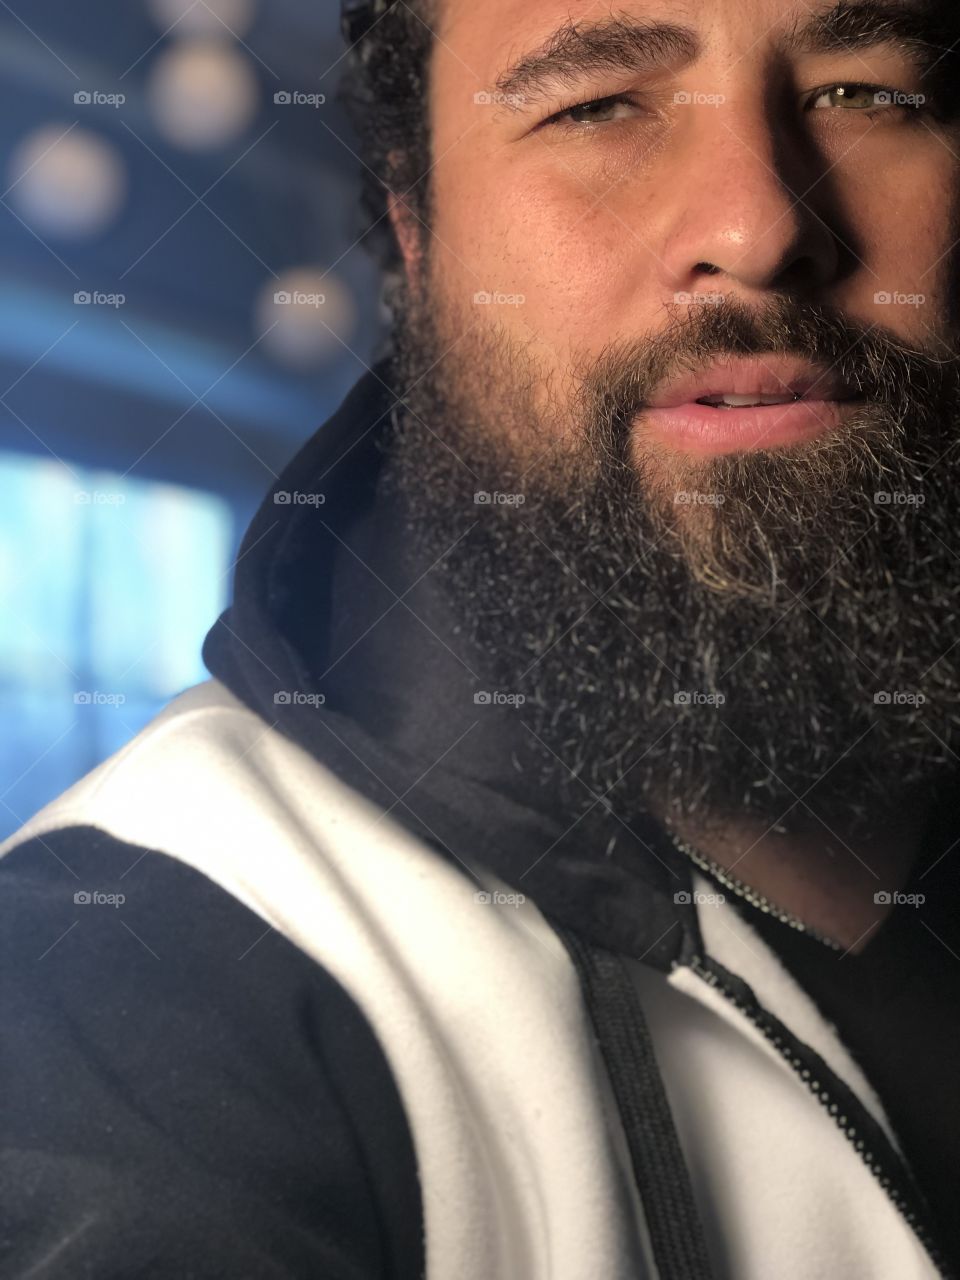 Man beard concerned 